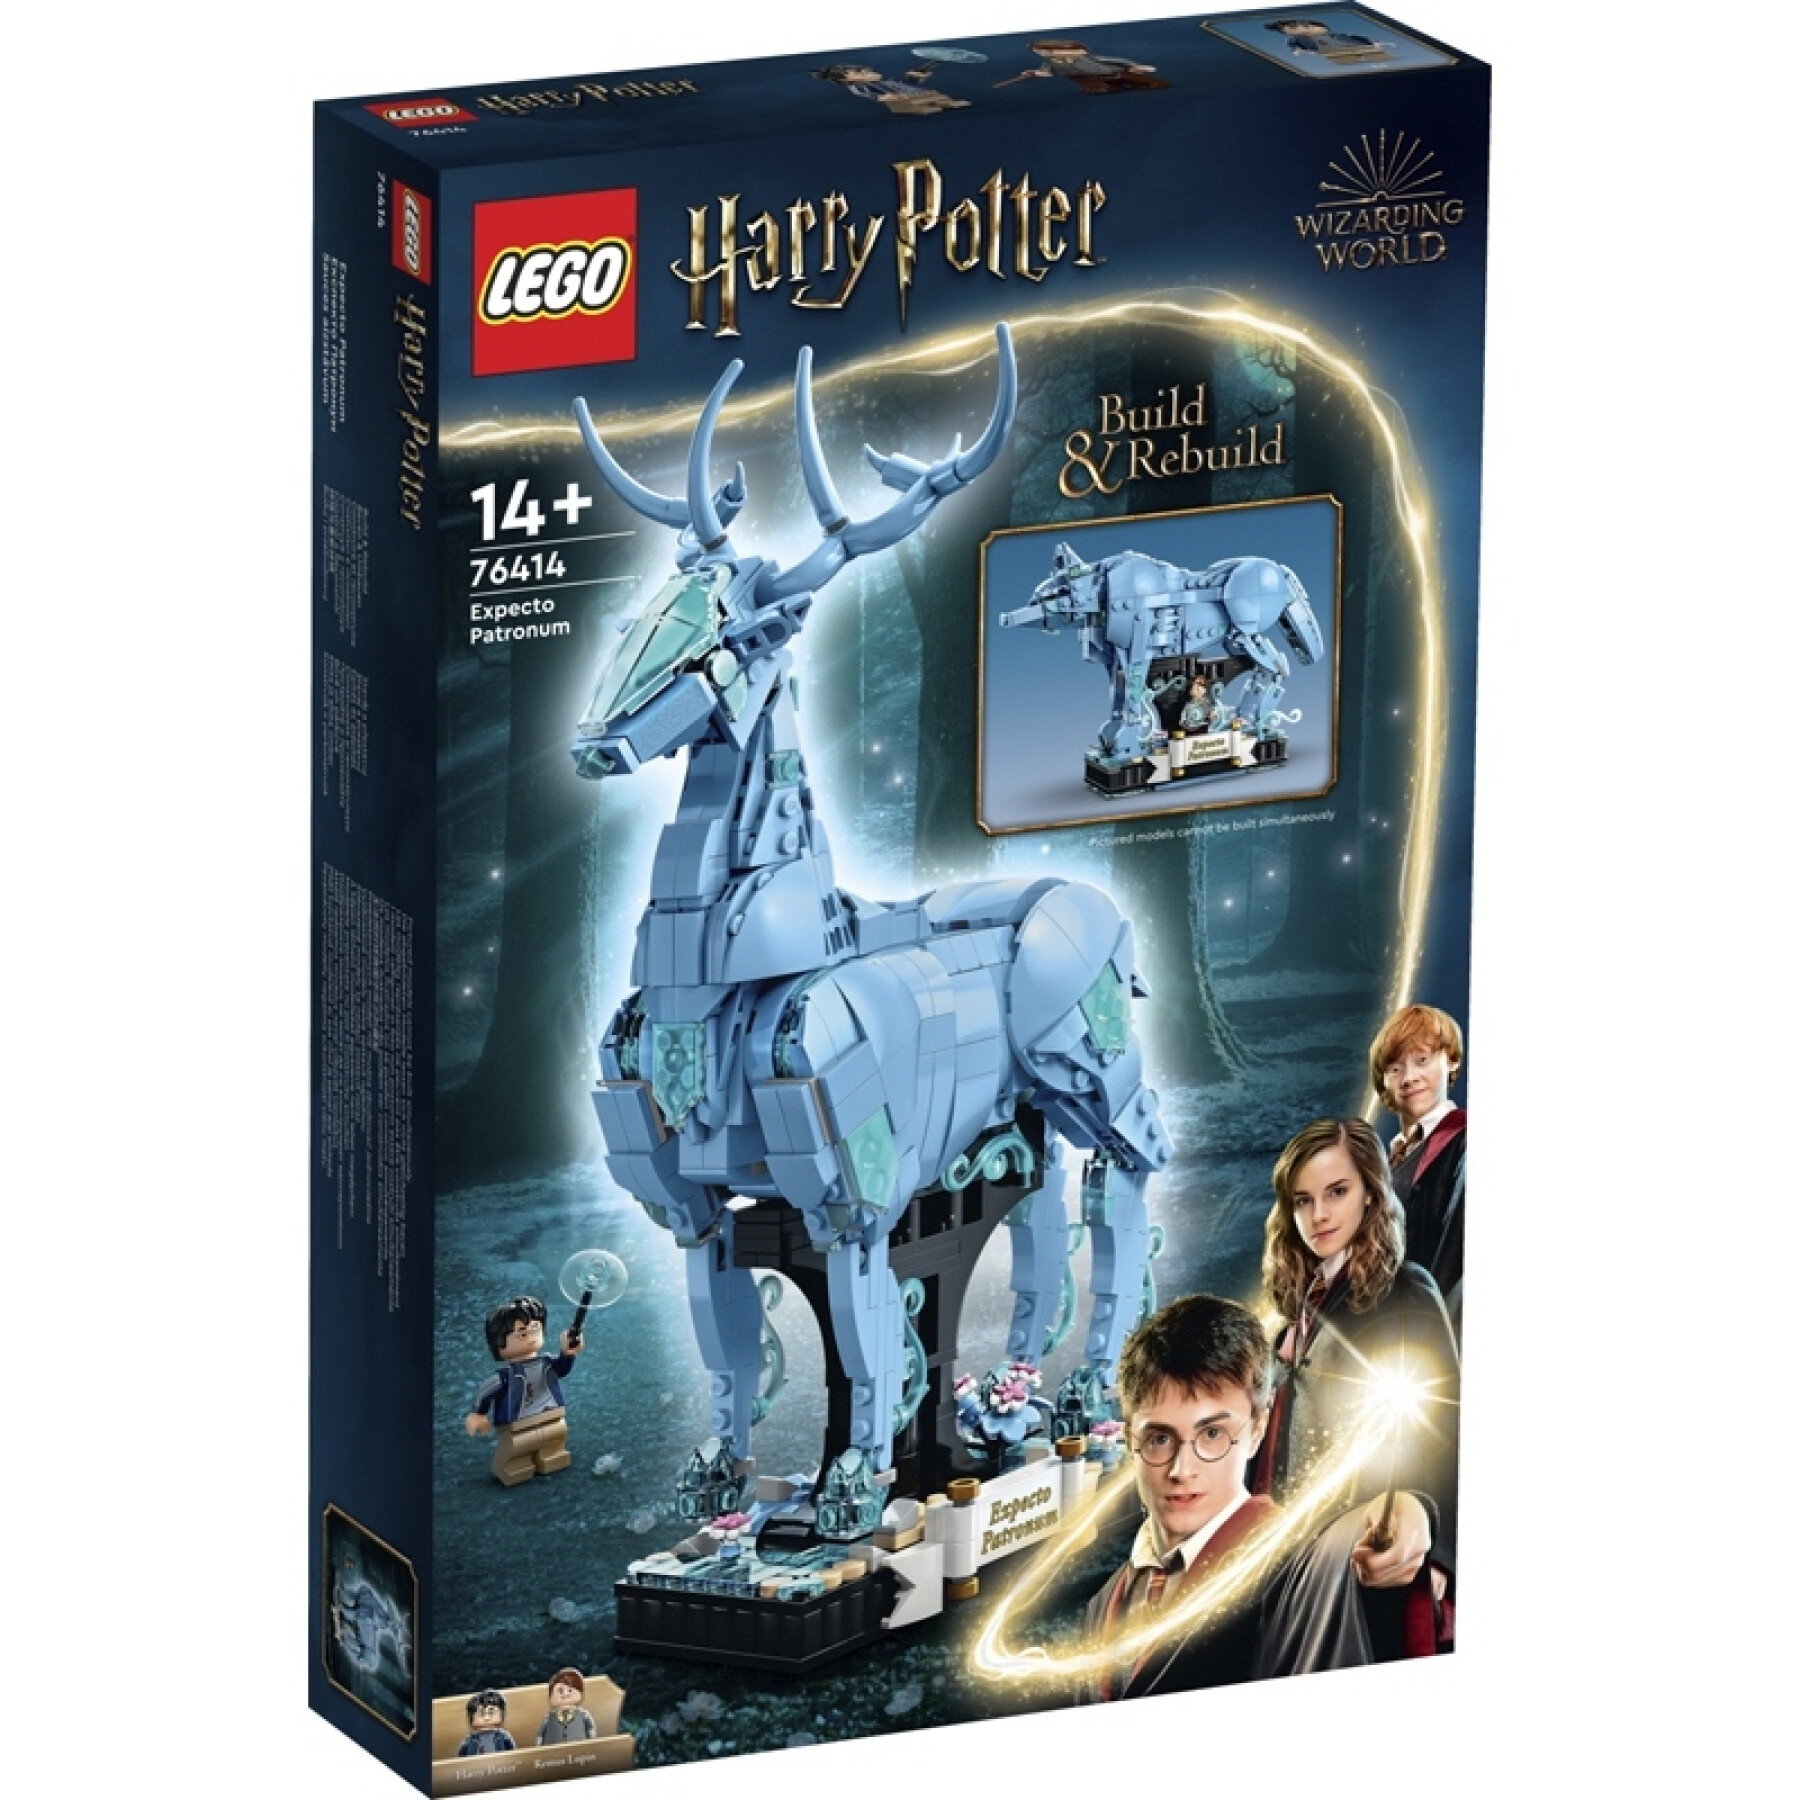 Building sets expecto patronum Lego Harry Potter